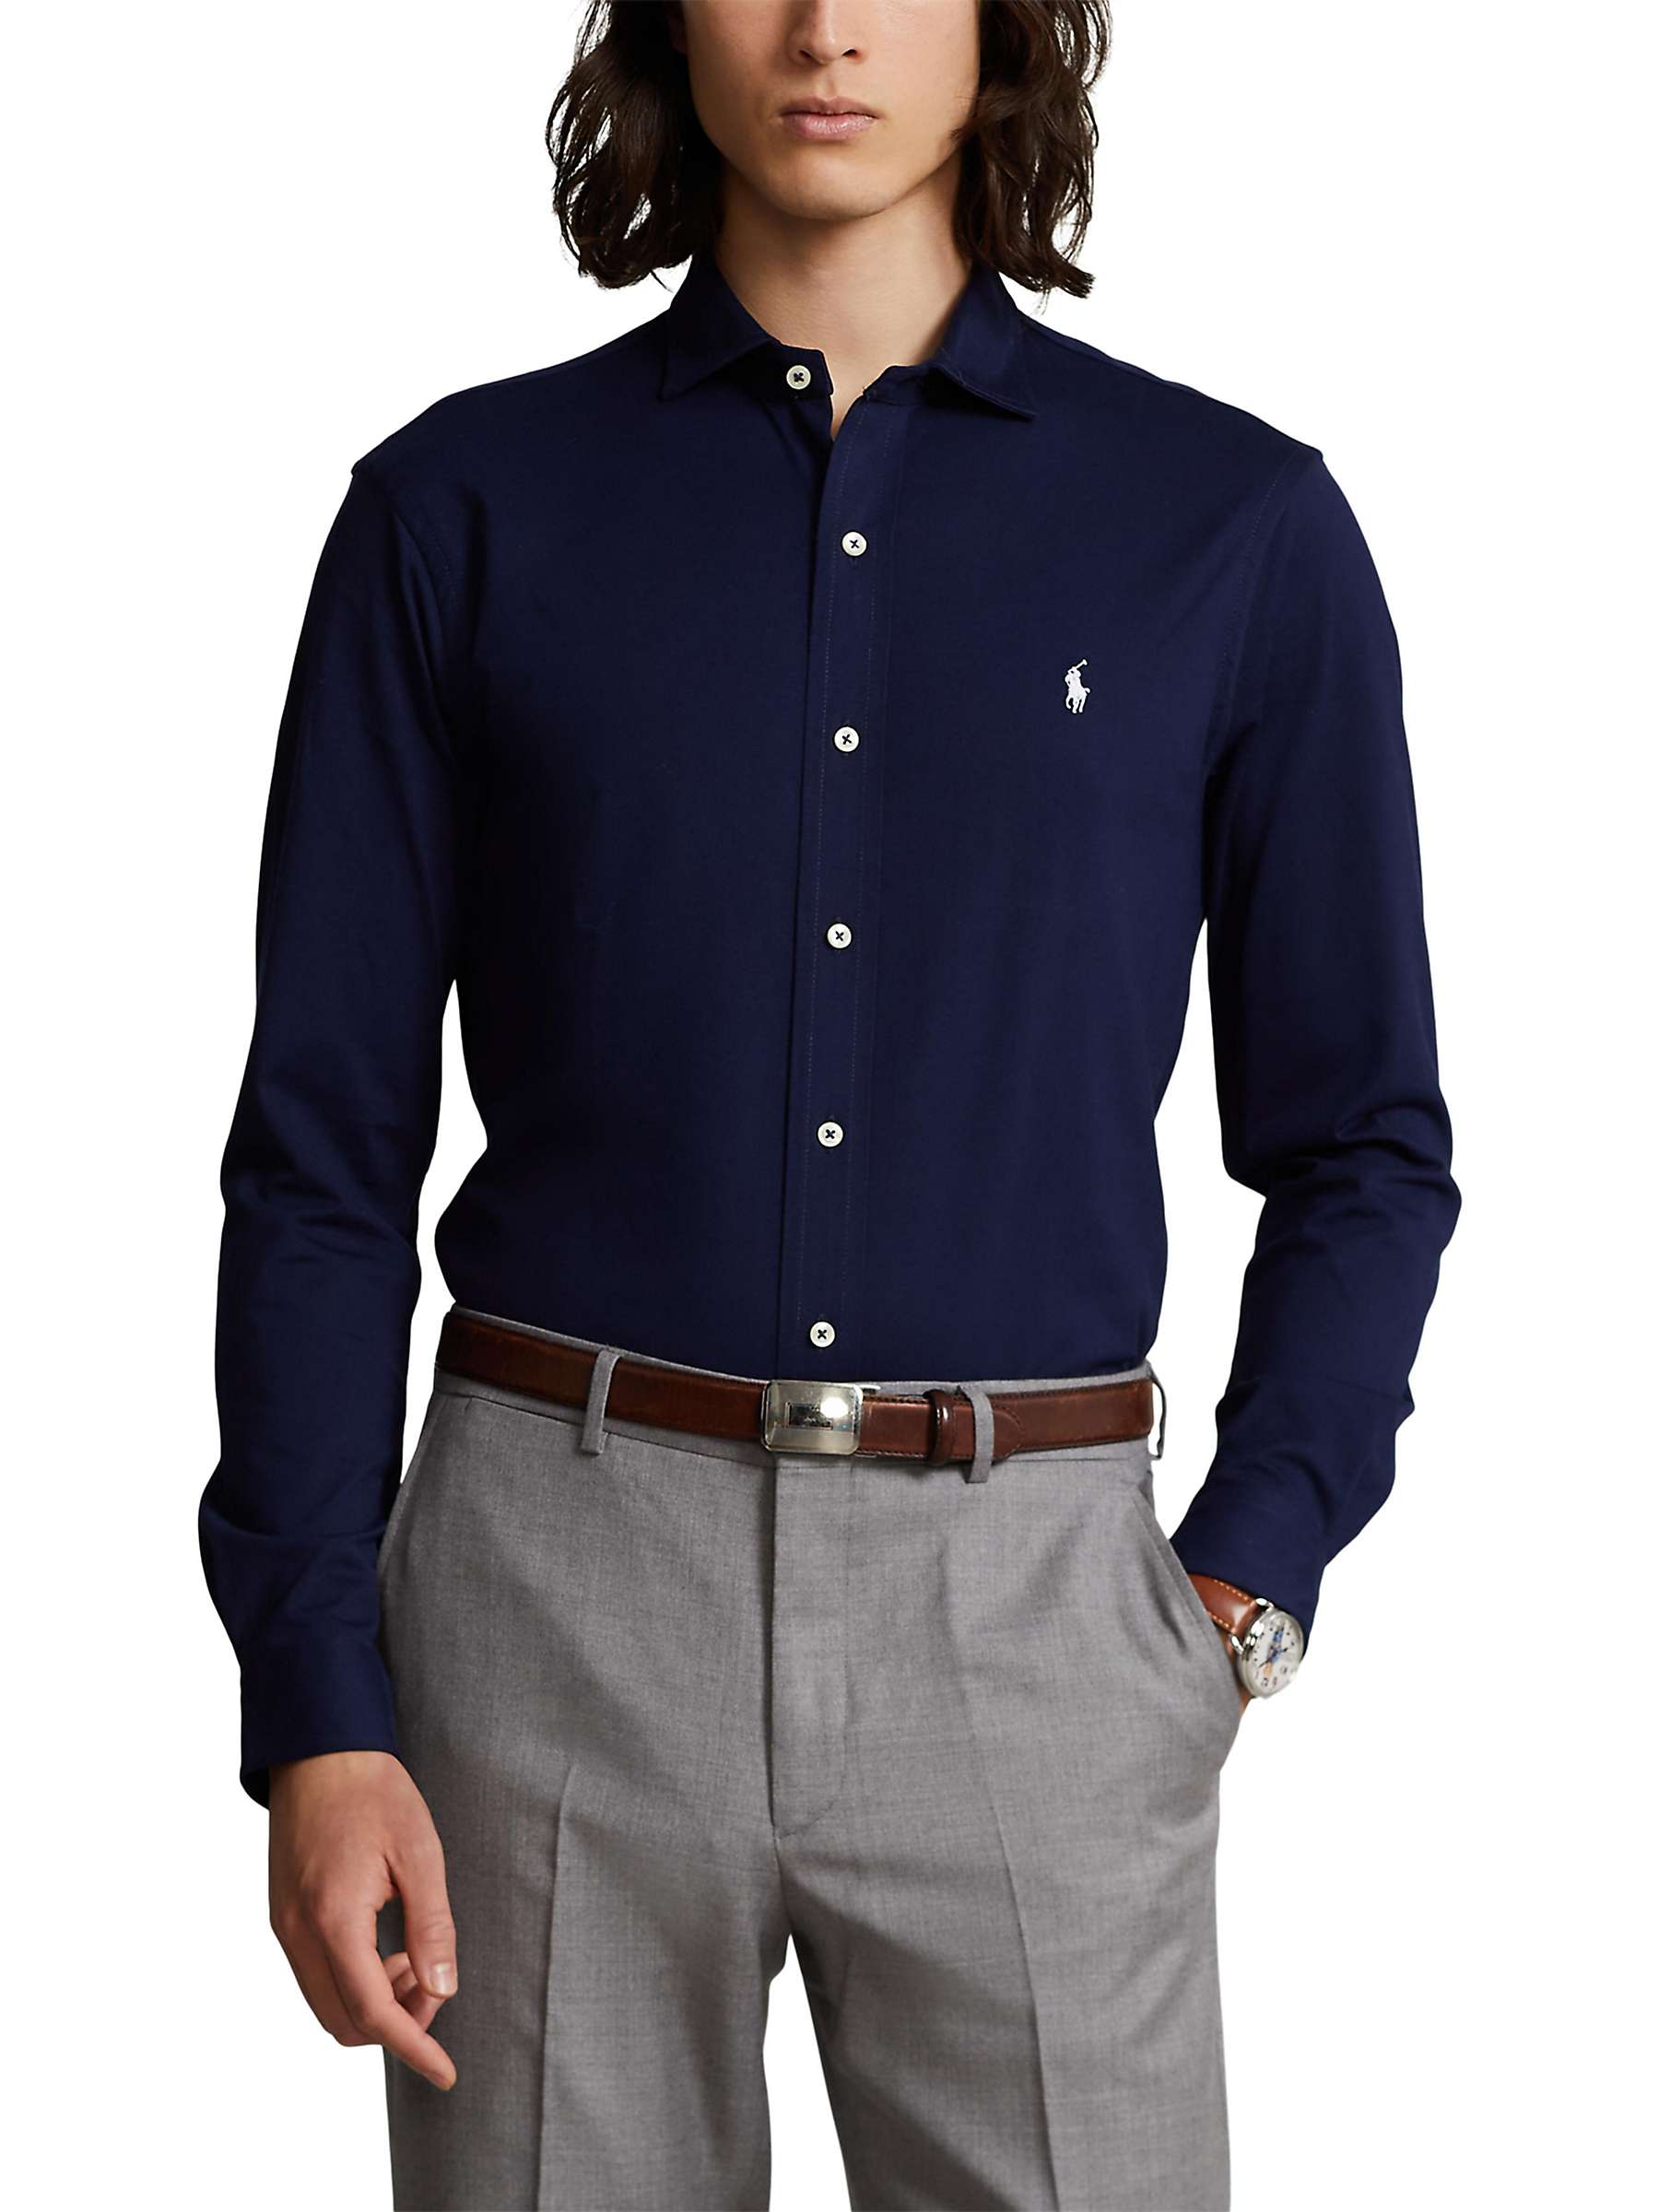 Buy Polo Ralph Lauren Long Sleeve Cotton Shirt Online at johnlewis.com